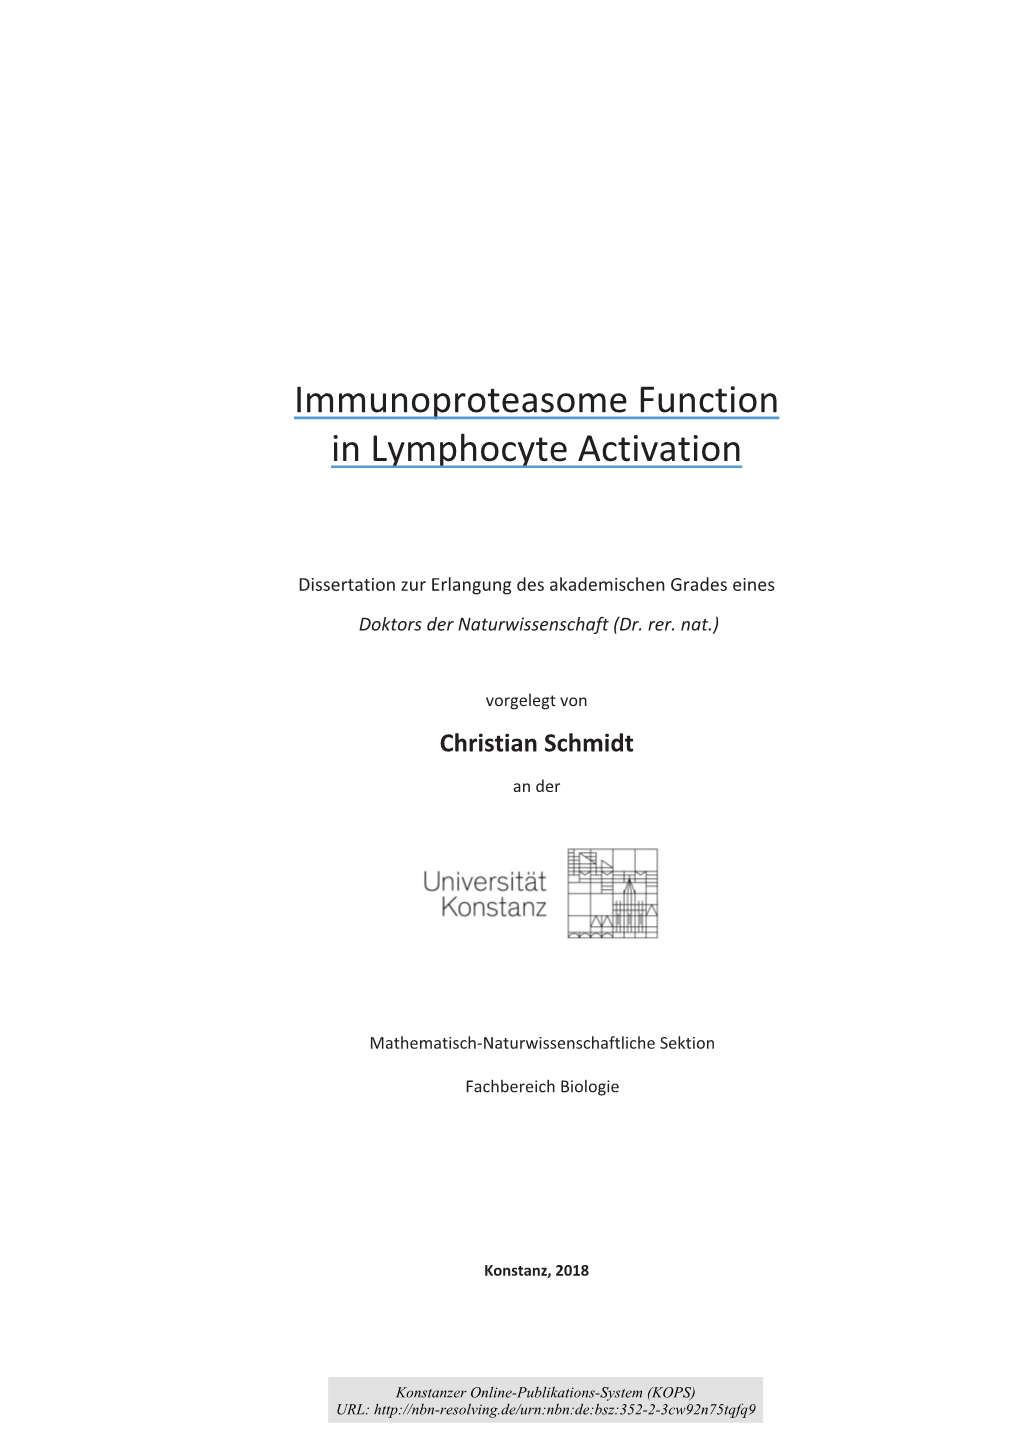 Immunoproteasome Function in Lymphocyte Activation